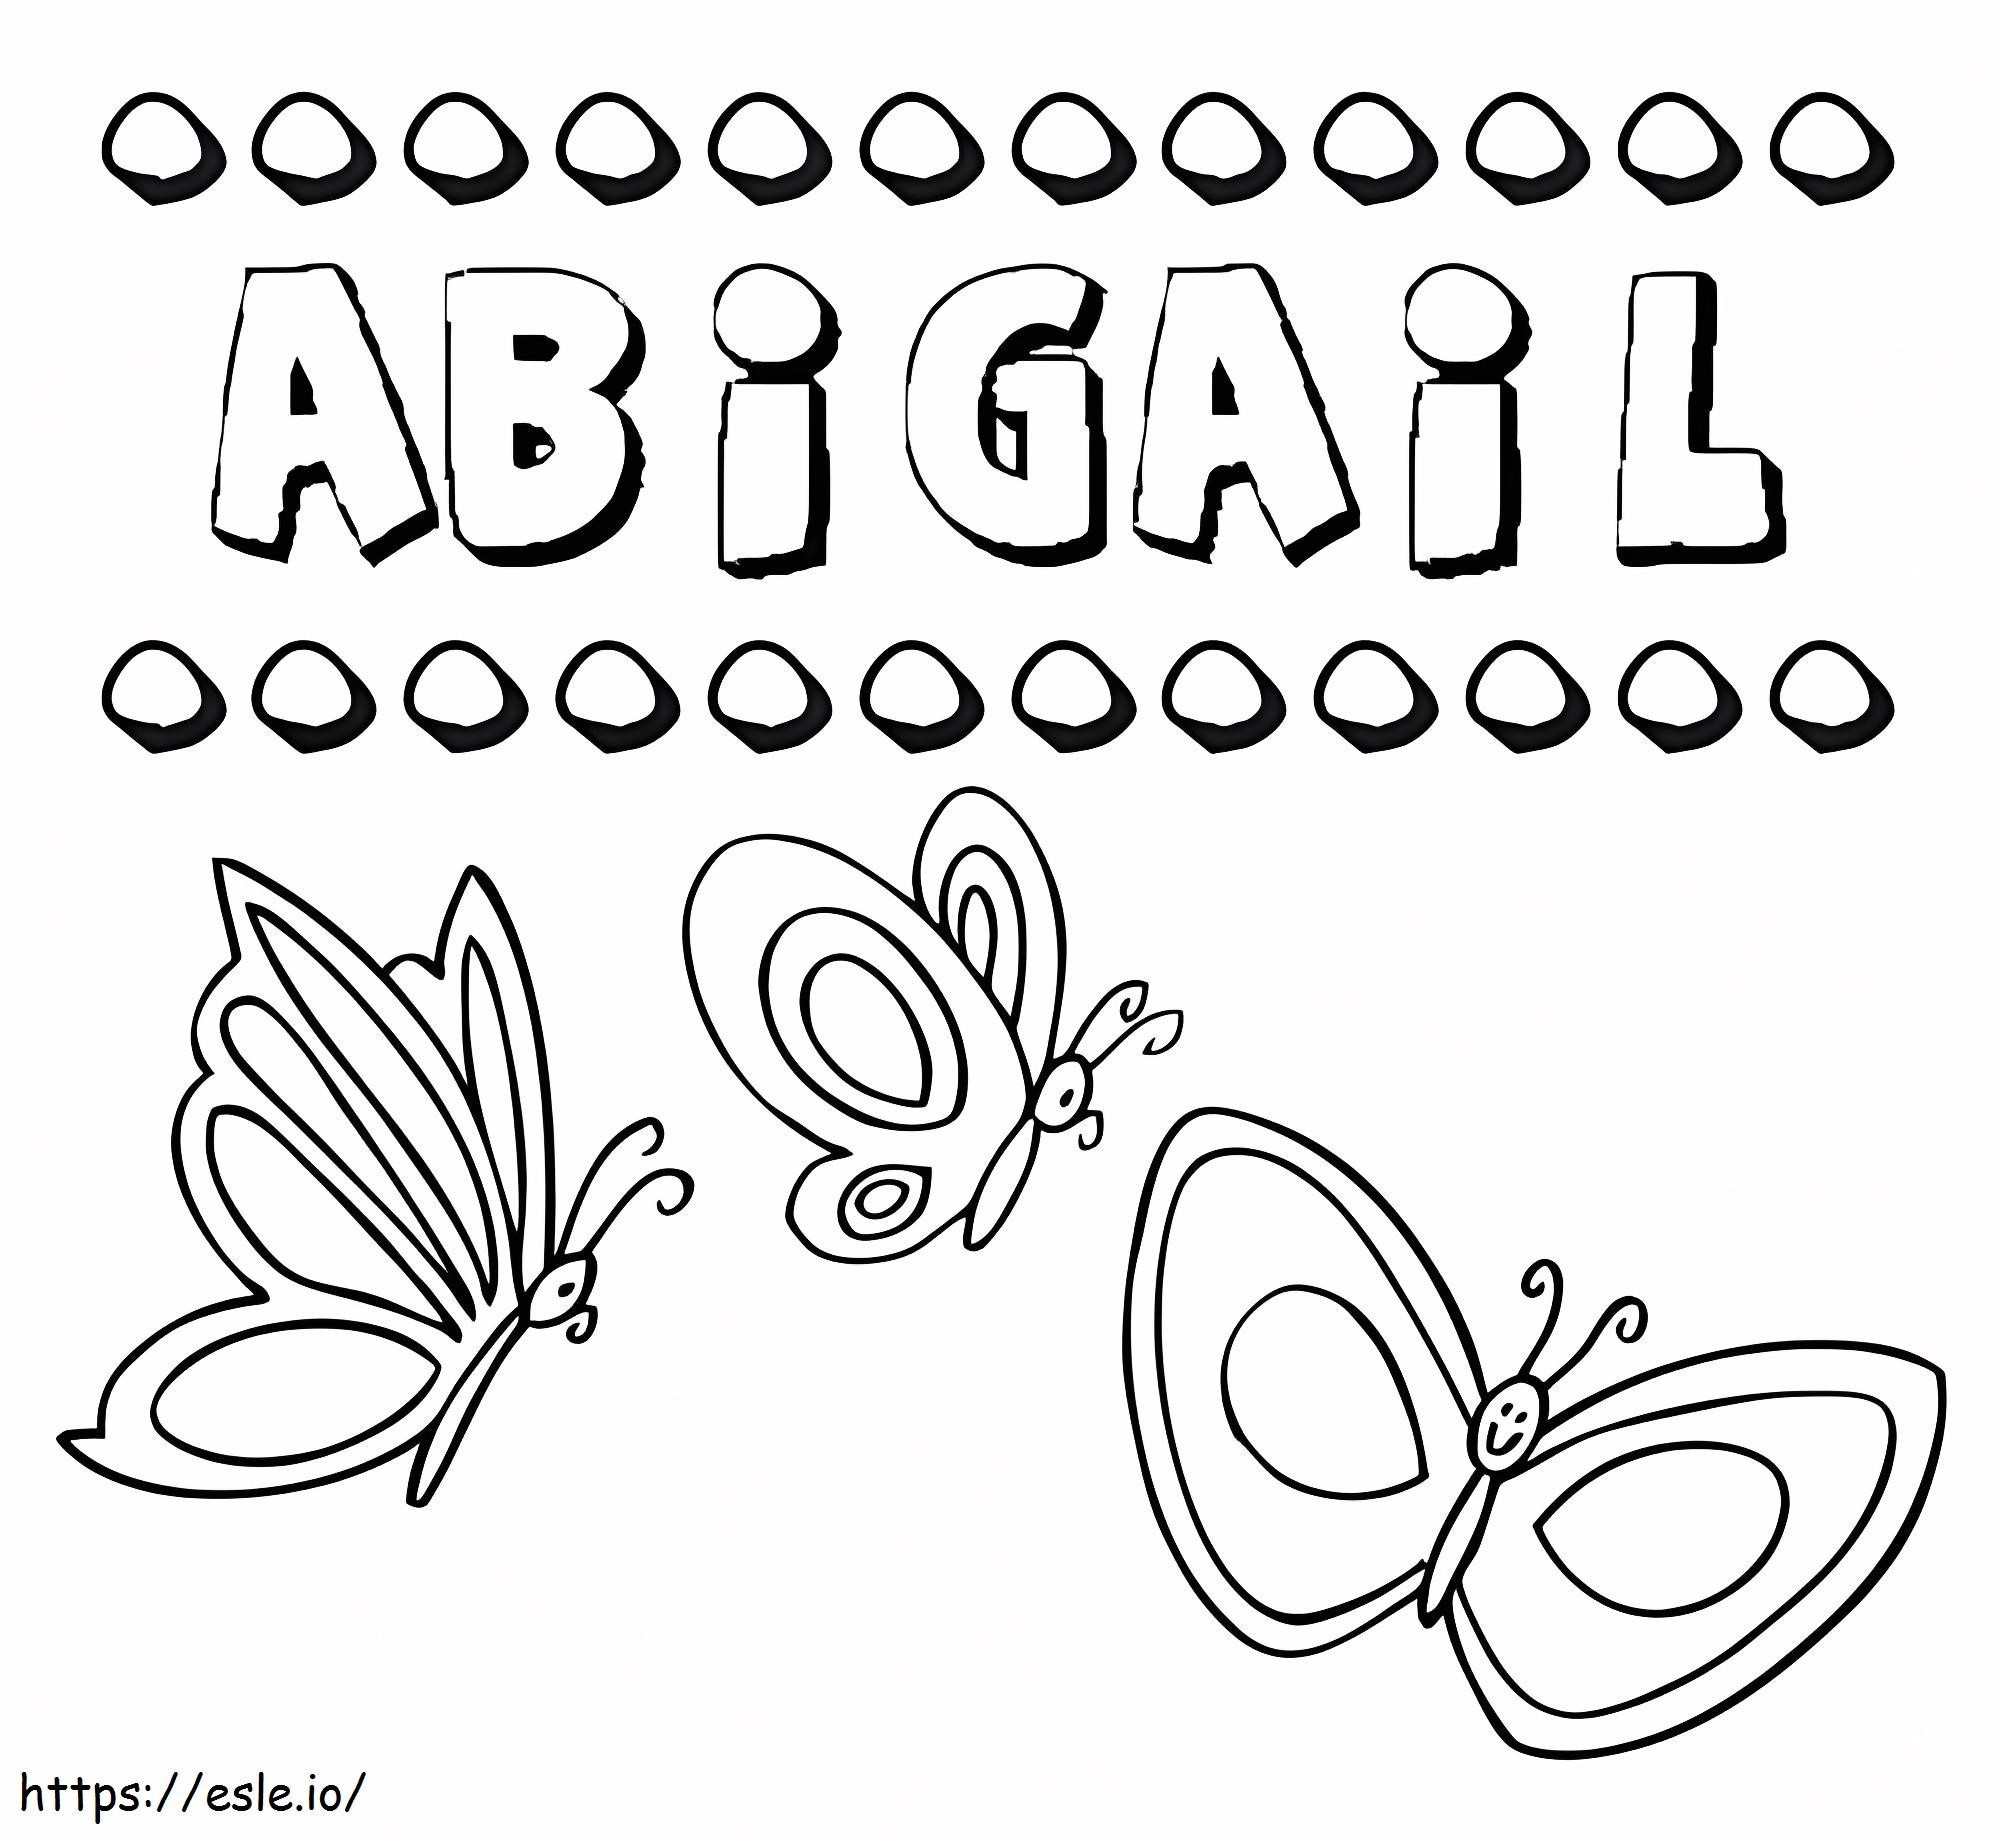 Abigail imprimabil gratuit de colorat